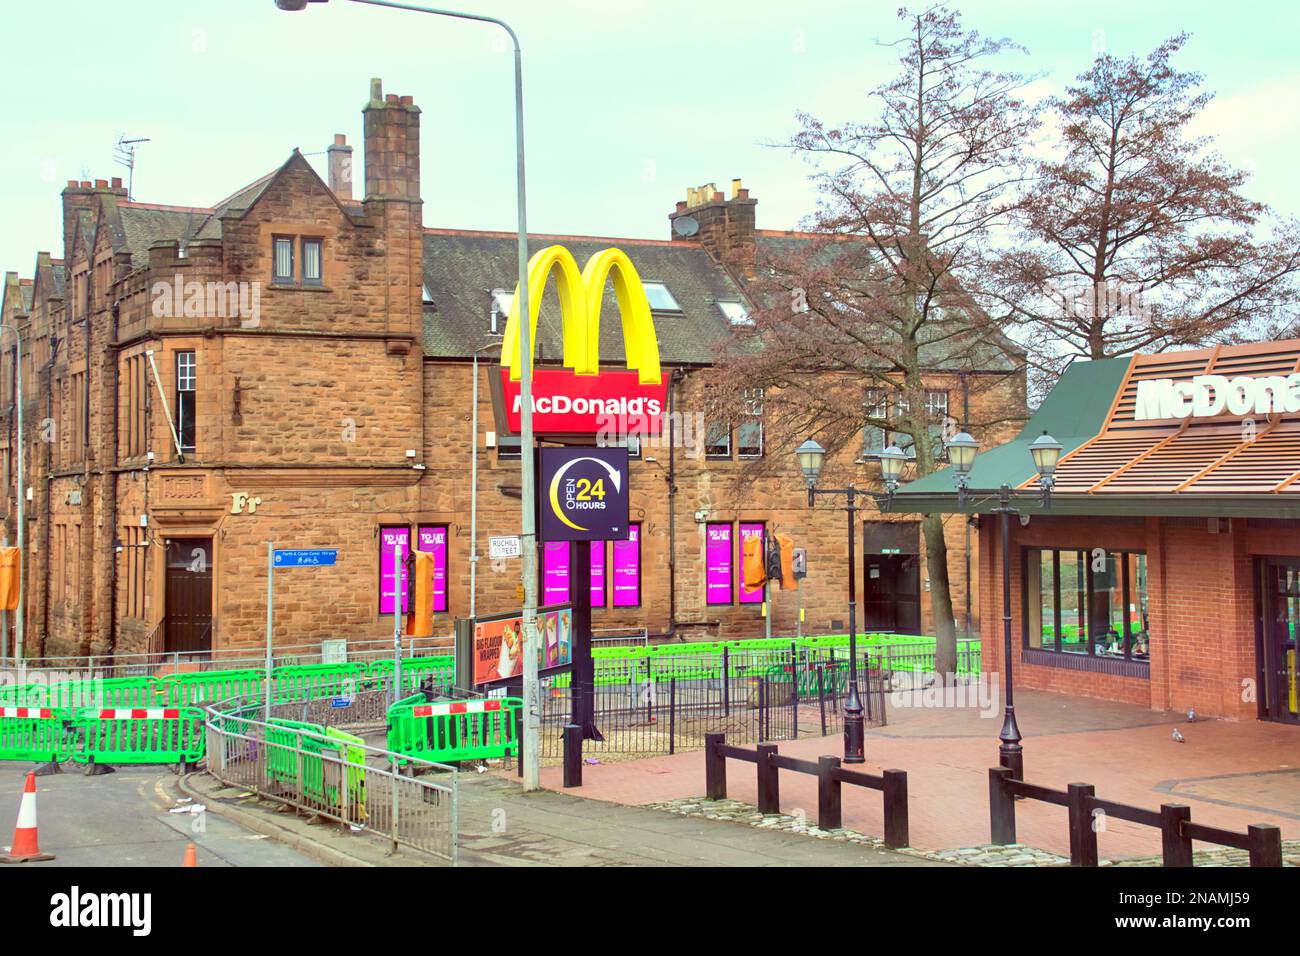 McDonald's restaurant Dine-in · Drive-through 1200 Maryhill Rd, Maryhill, Glasgow G20 9BA Stock Photo